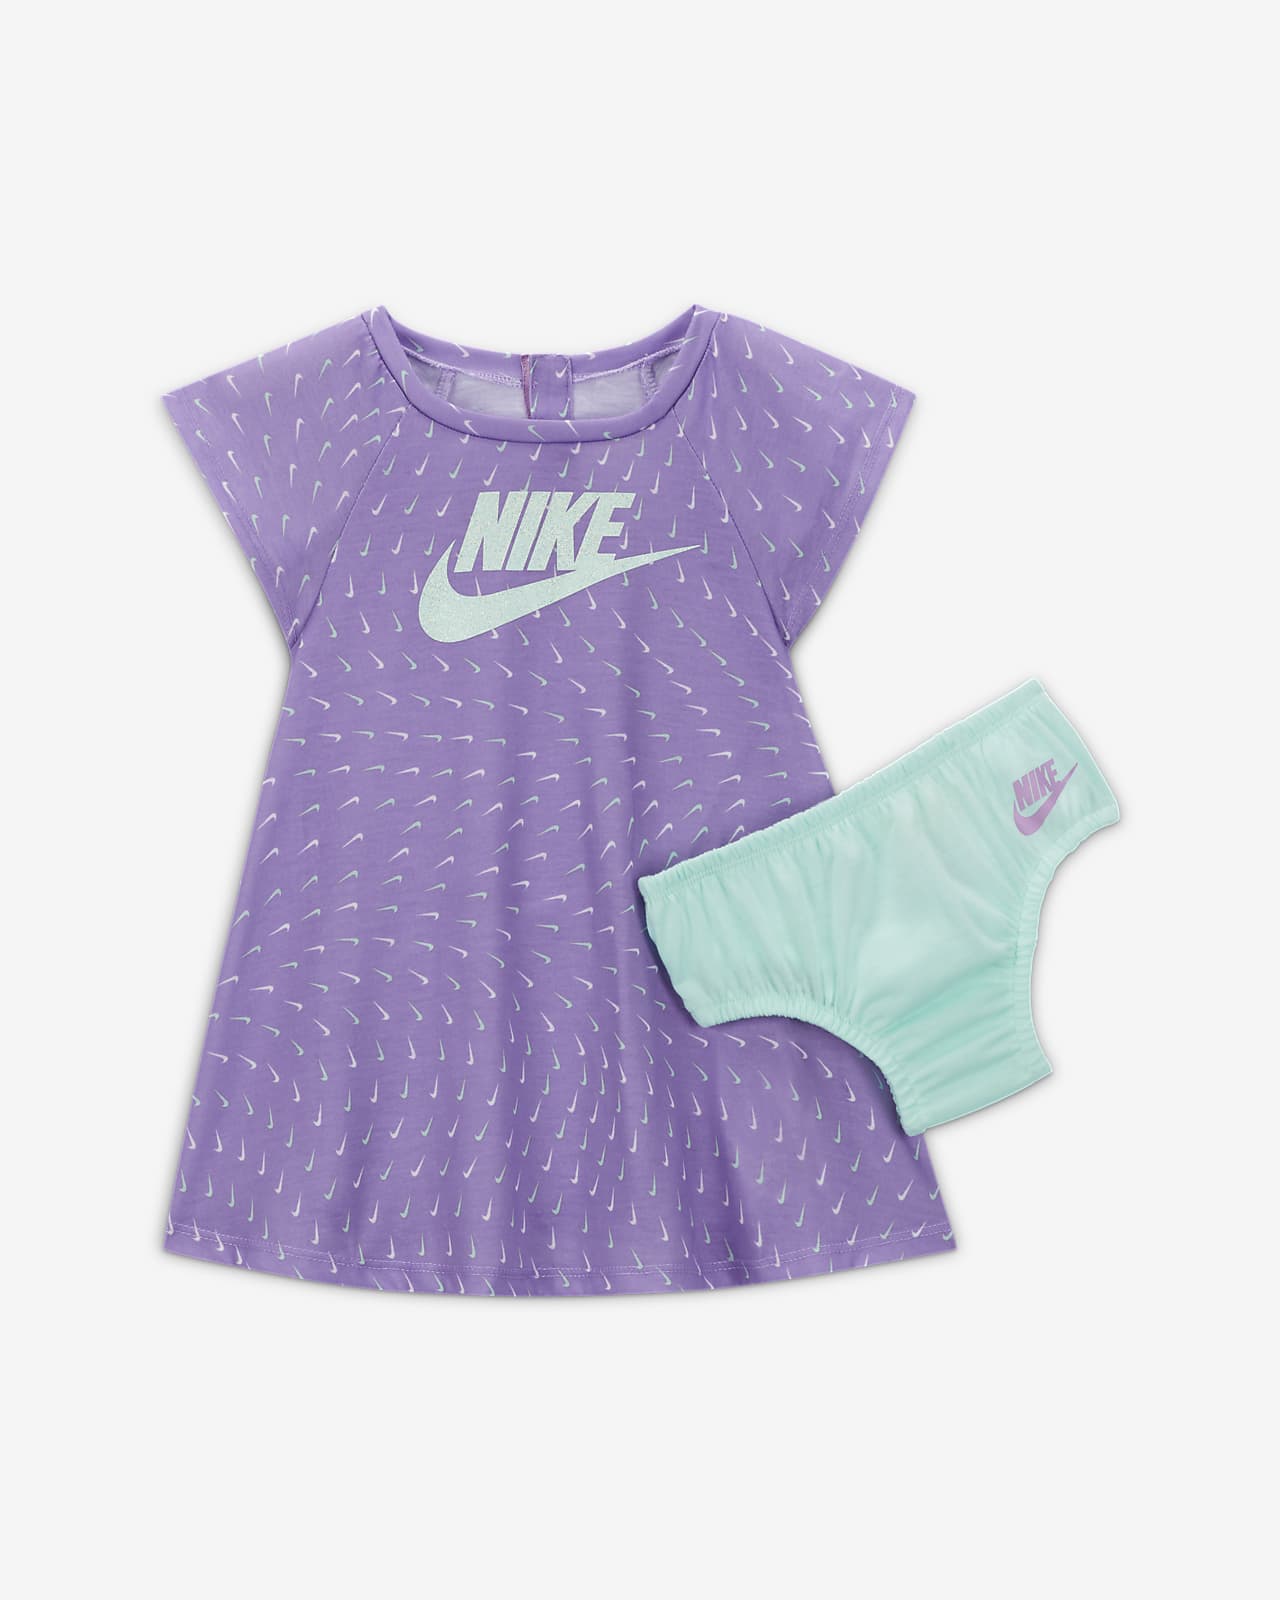 Nike Baby (12-24M) Dress. 